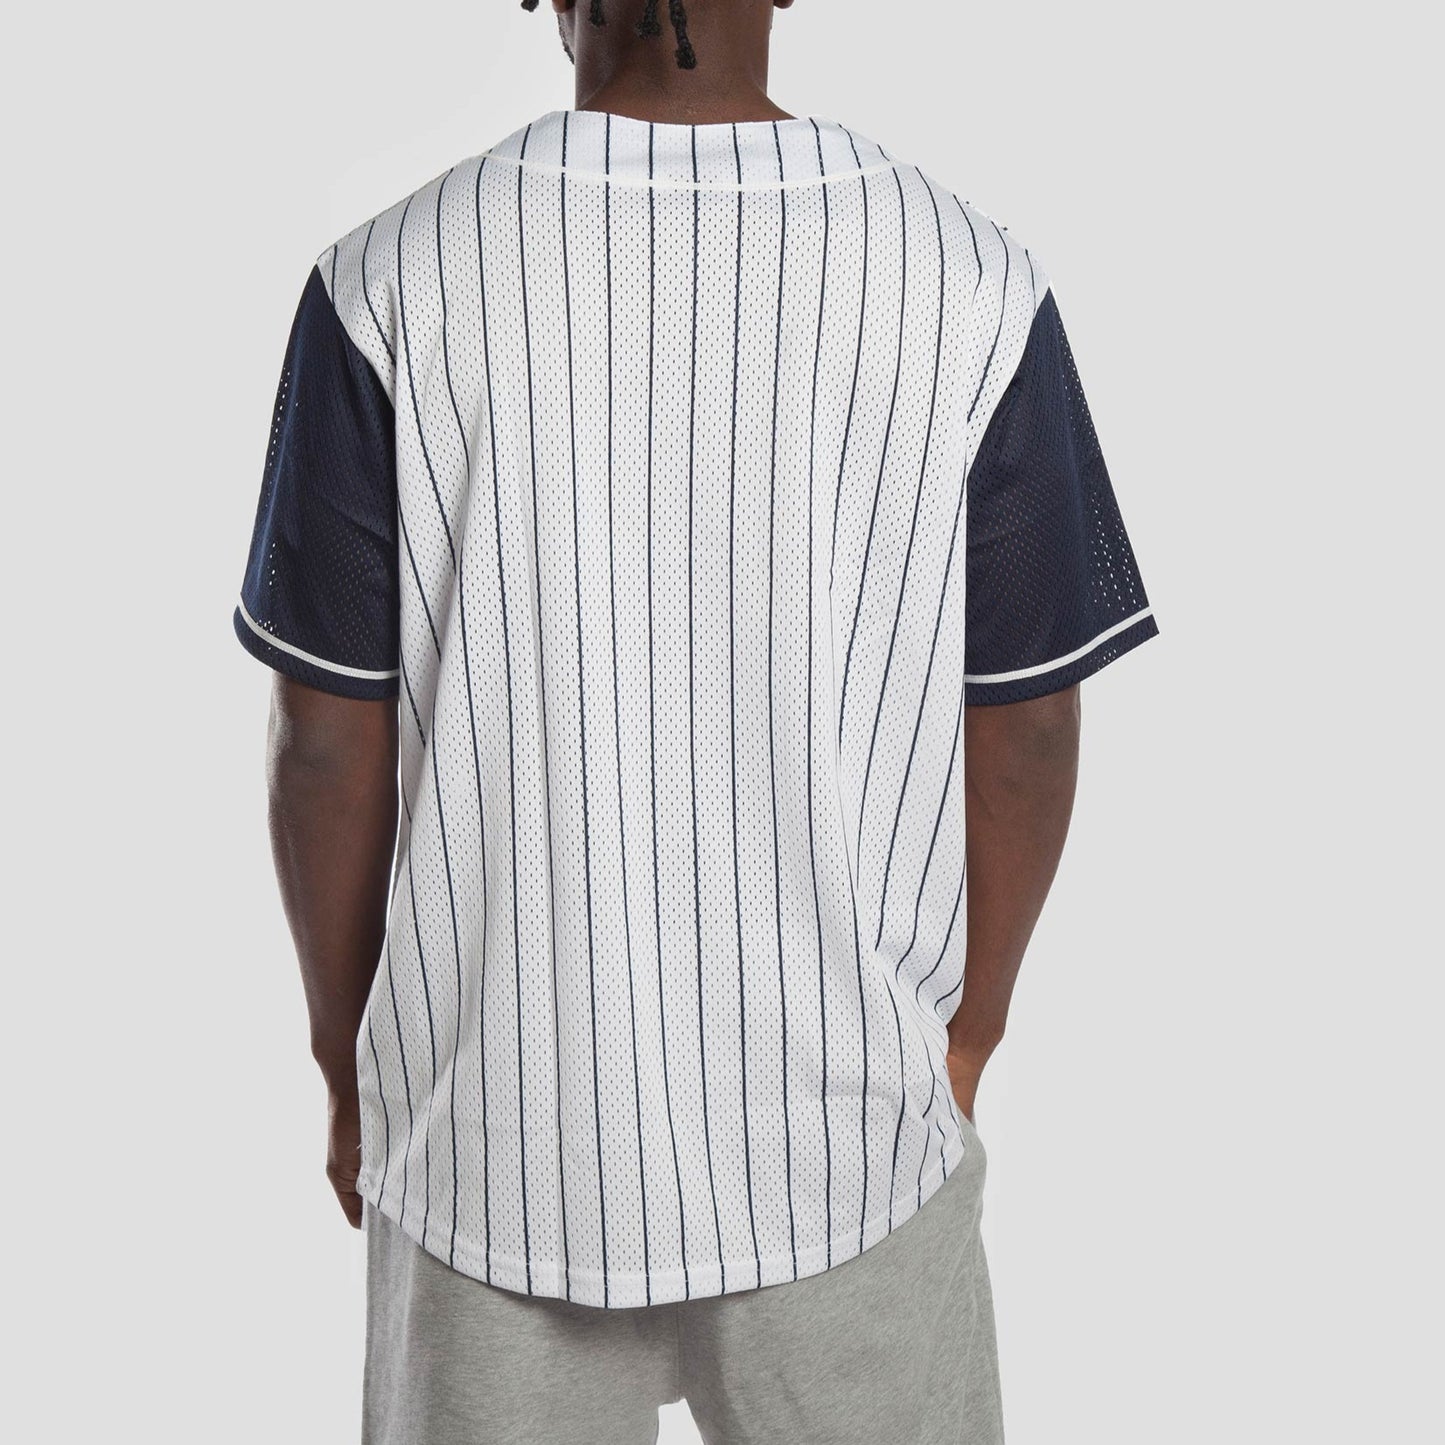 HUF Camiseta Baseball Harlem - KN00208 - Colección Chico